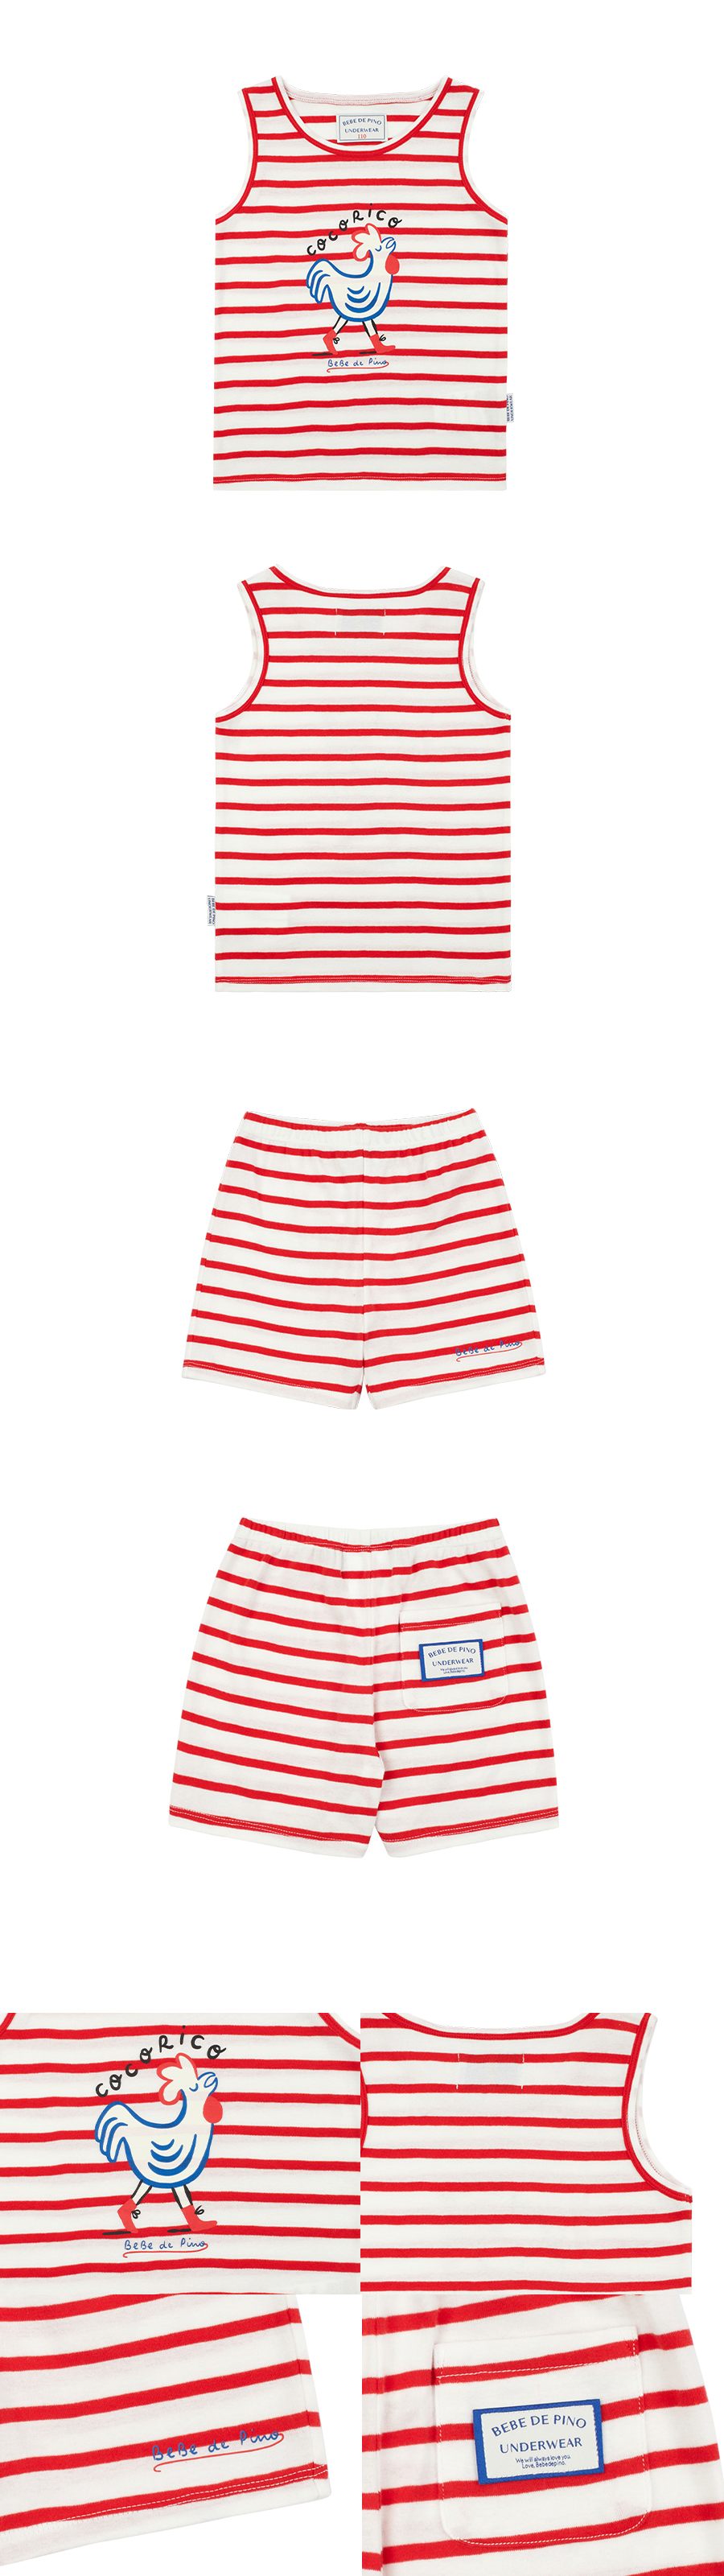 Paris cocorico red stripe loungewear set Details